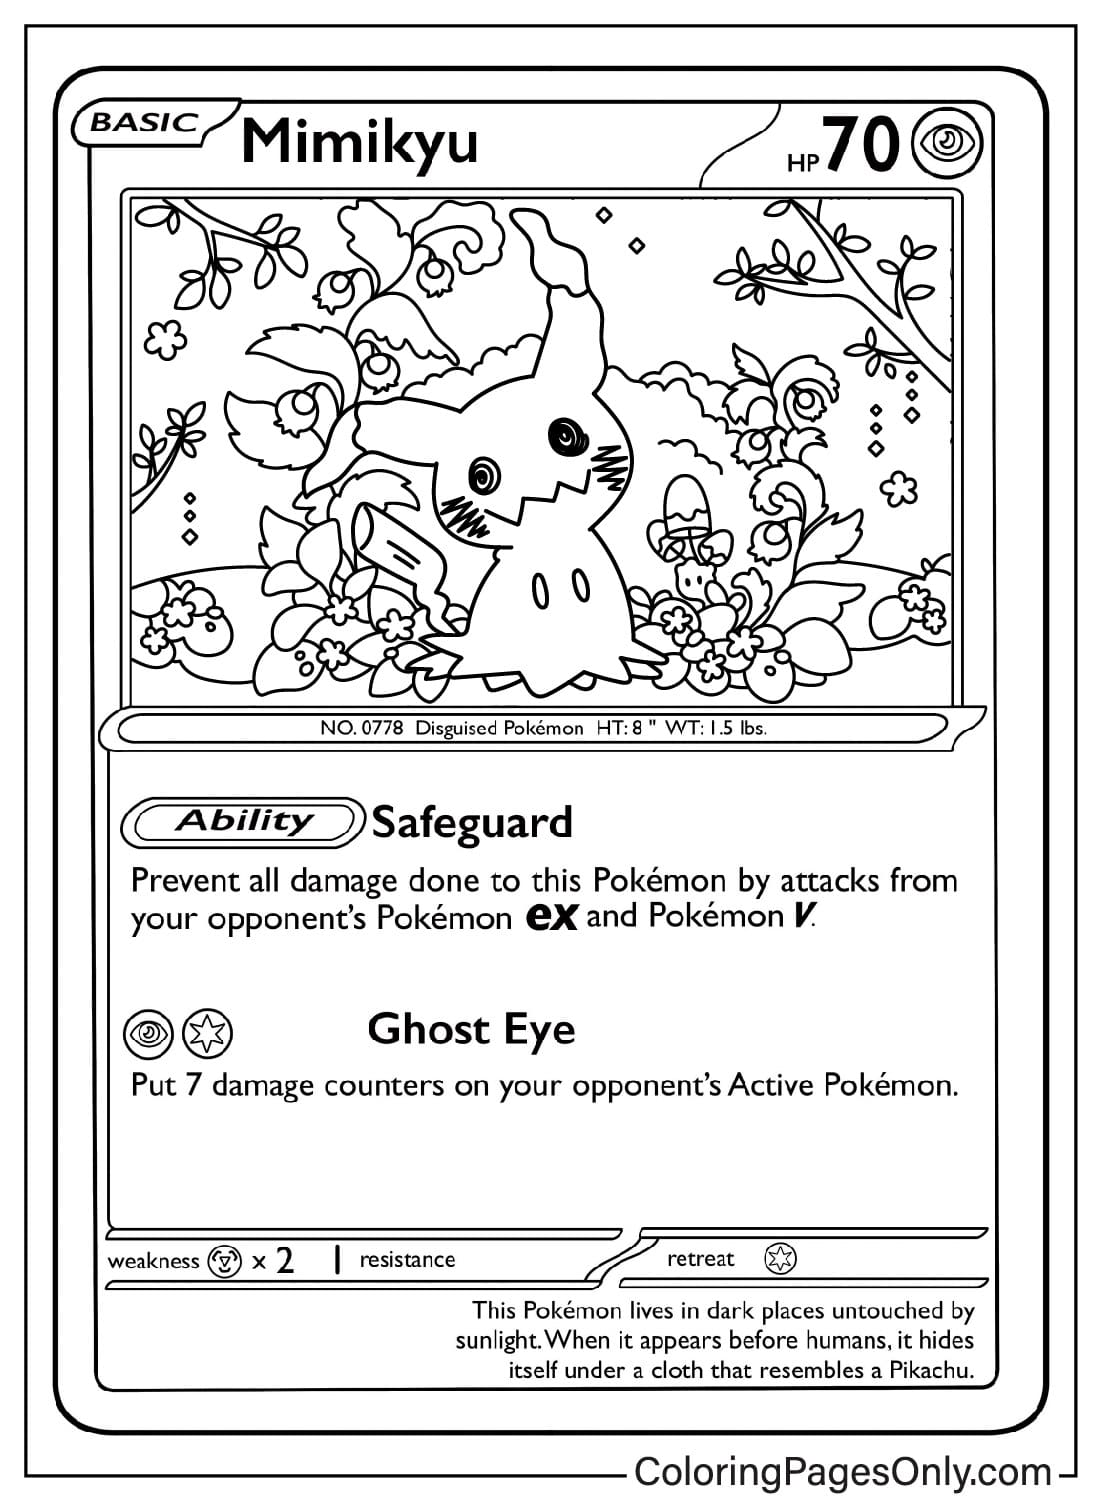 Mimikyu Pokemon Card from Mimikyu